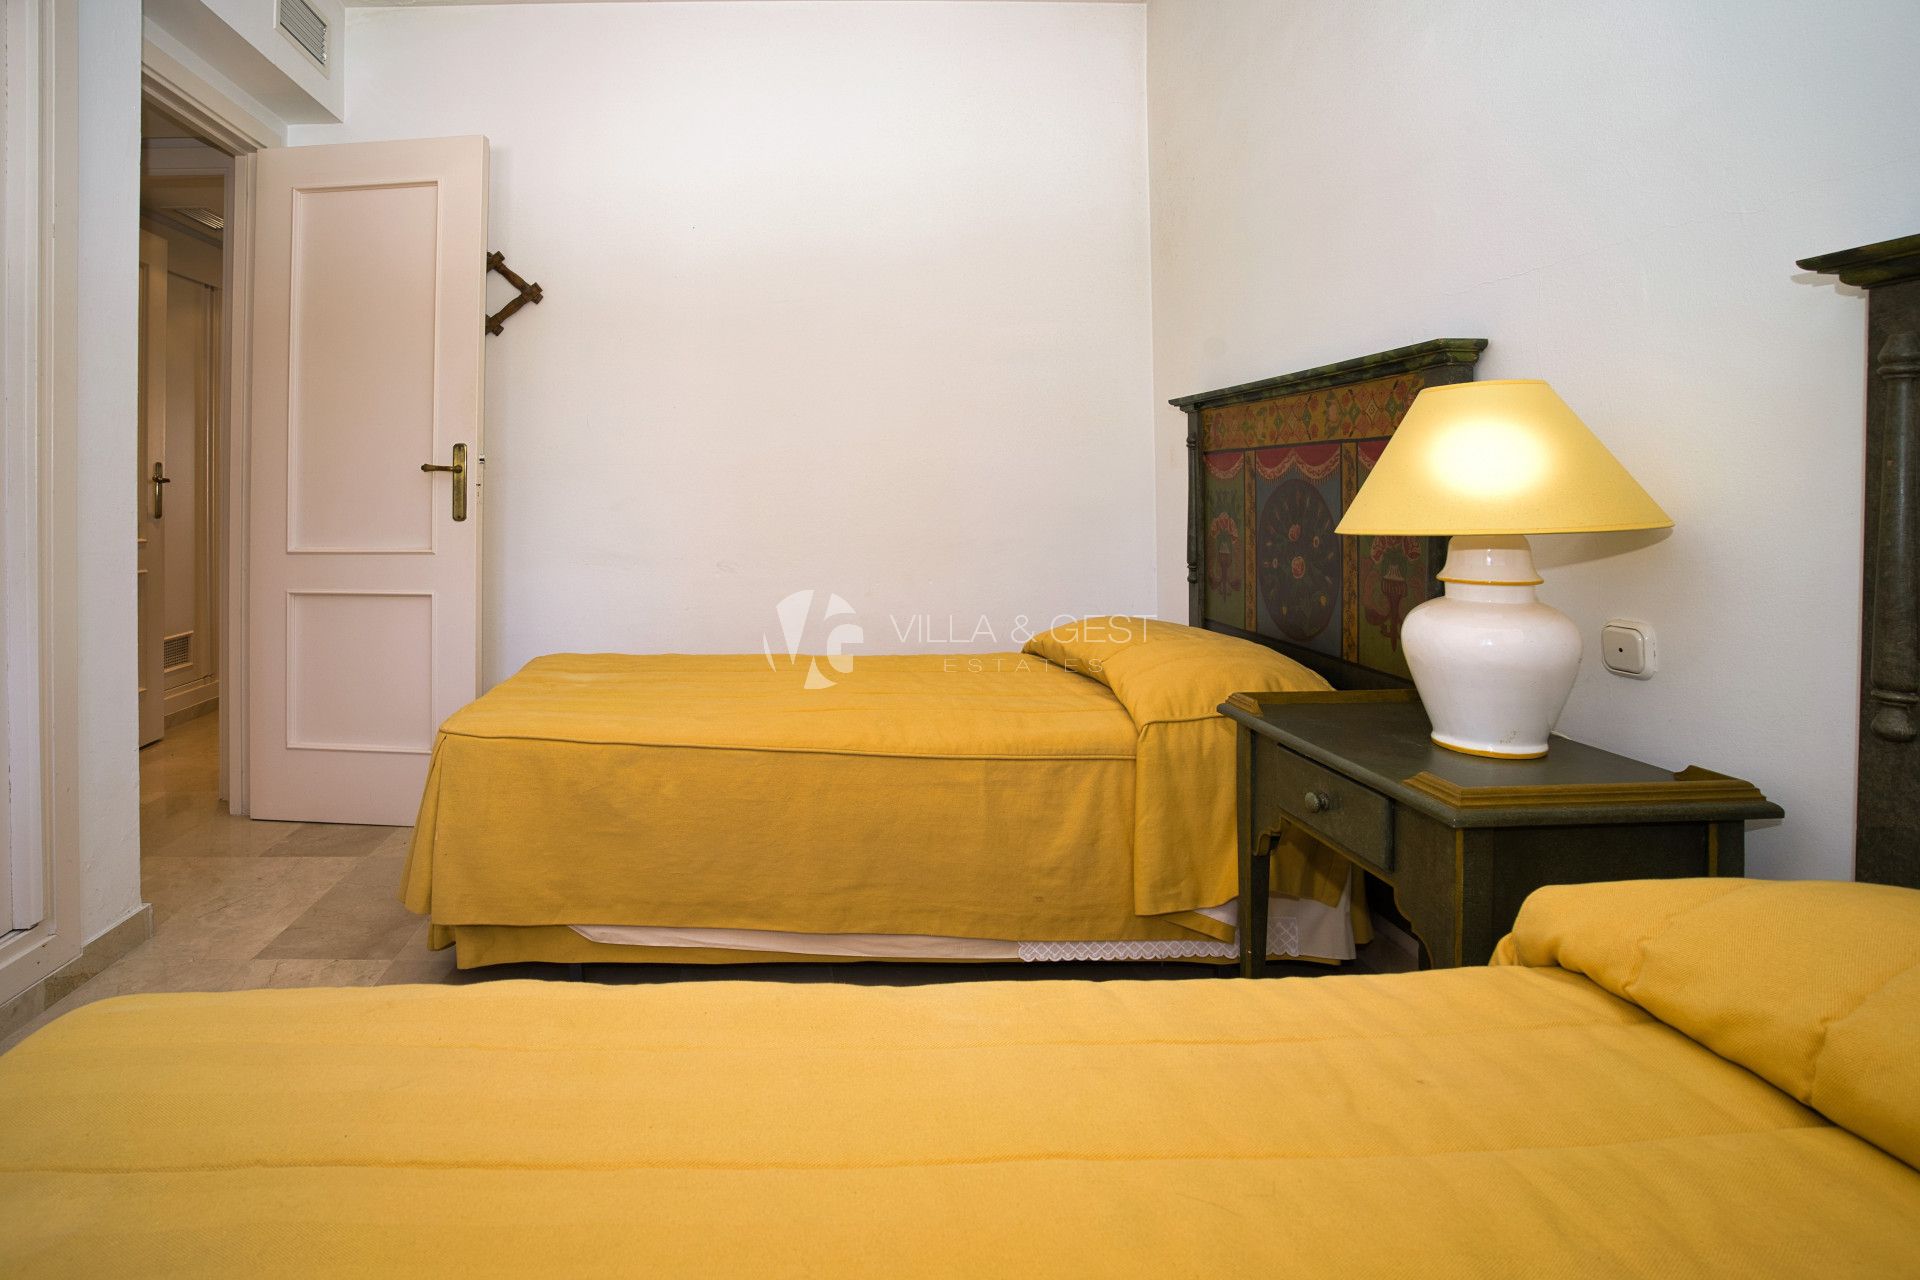 Apartment for sale in San Pedro de Alcantara, Costa del Sol